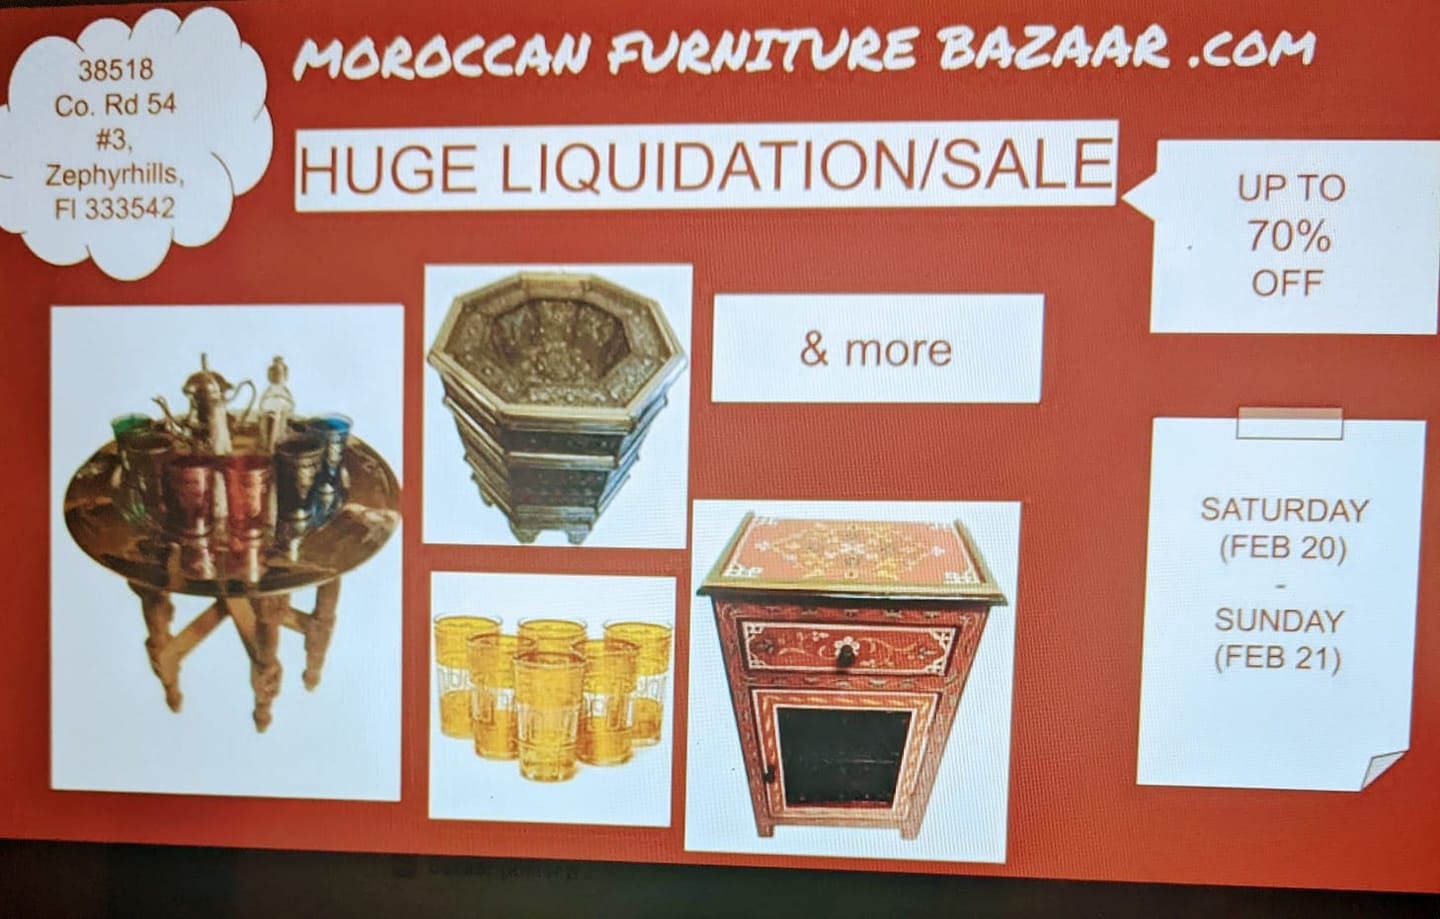 Moroccan Furniture Bazaar LLC